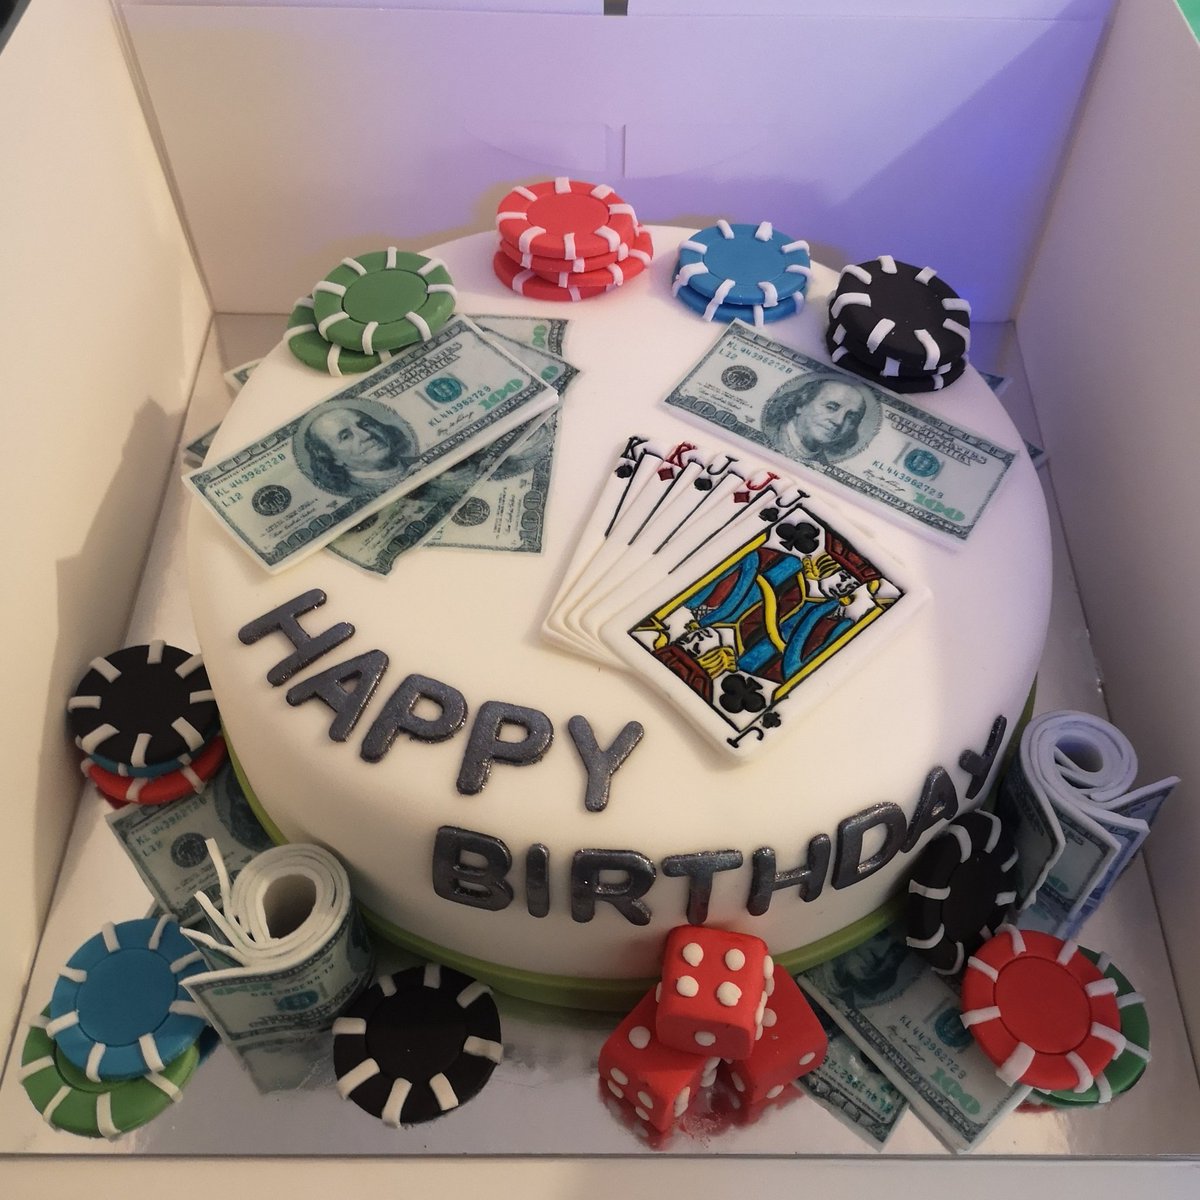 Gambling themed cake
#jdcakes2018 #hull #cakedecorating #cake #vegas #handpaintedcake